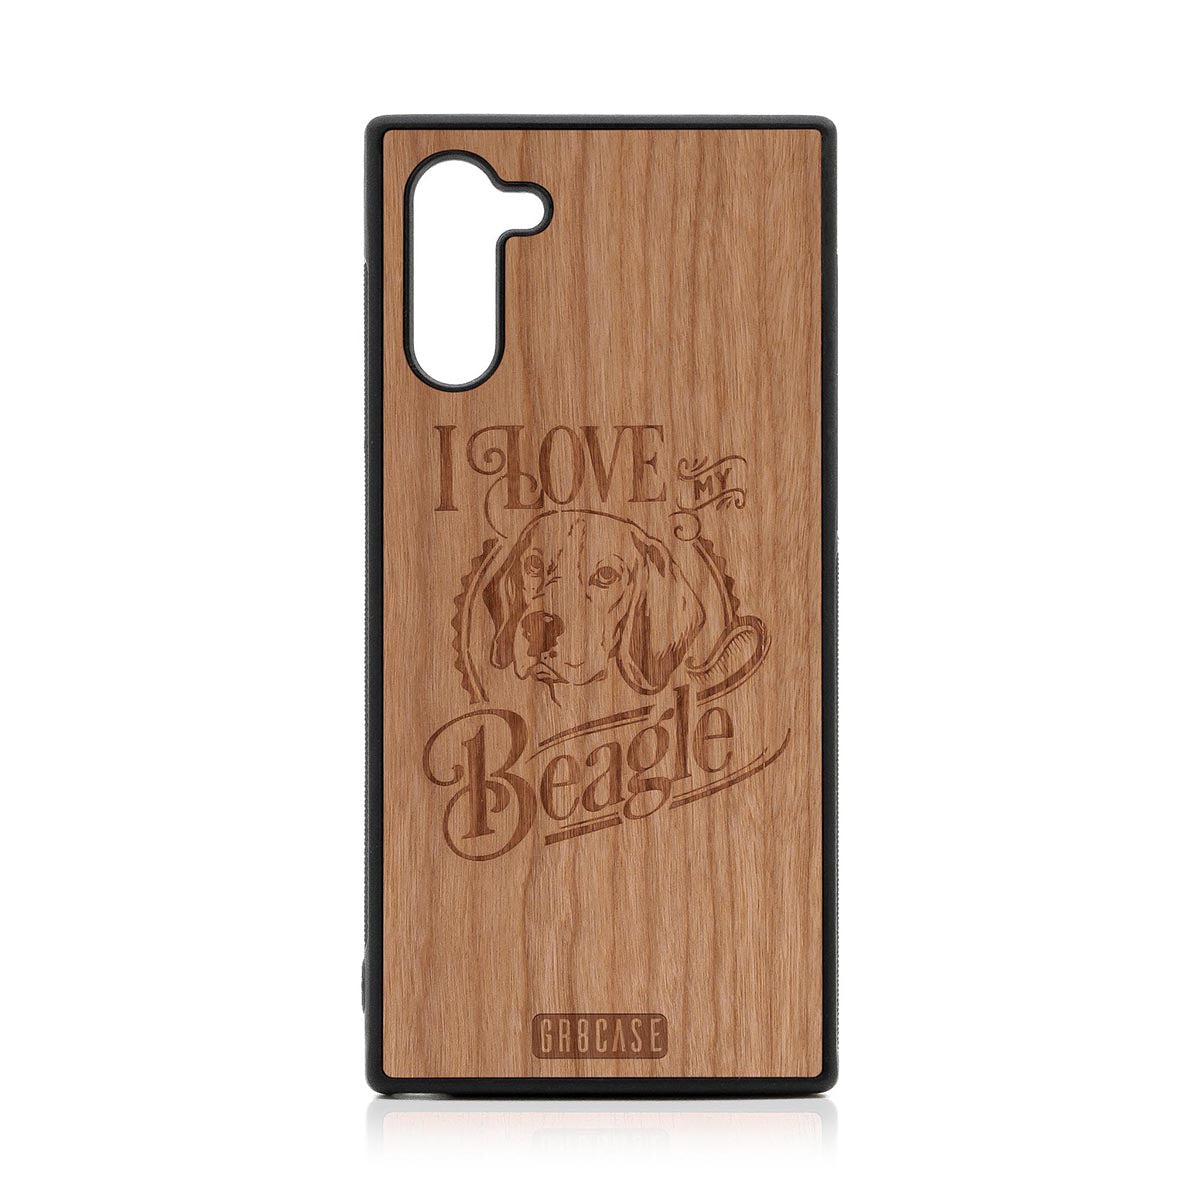 I Love My Beagle Design Wood Case Samsung Galaxy Note 10 by GR8CASE